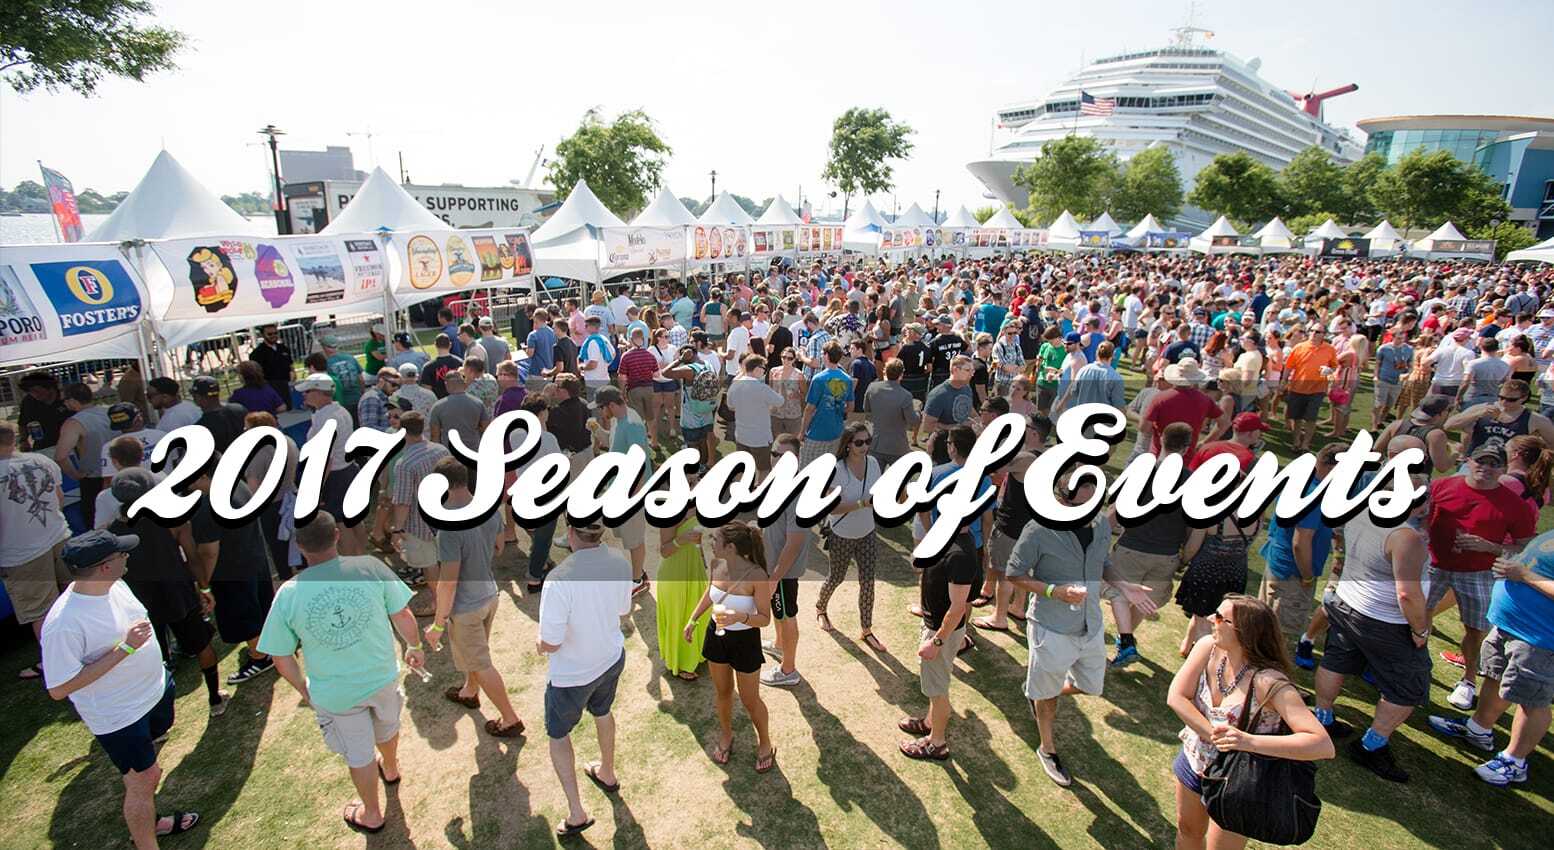 2017 Season of Events vendors